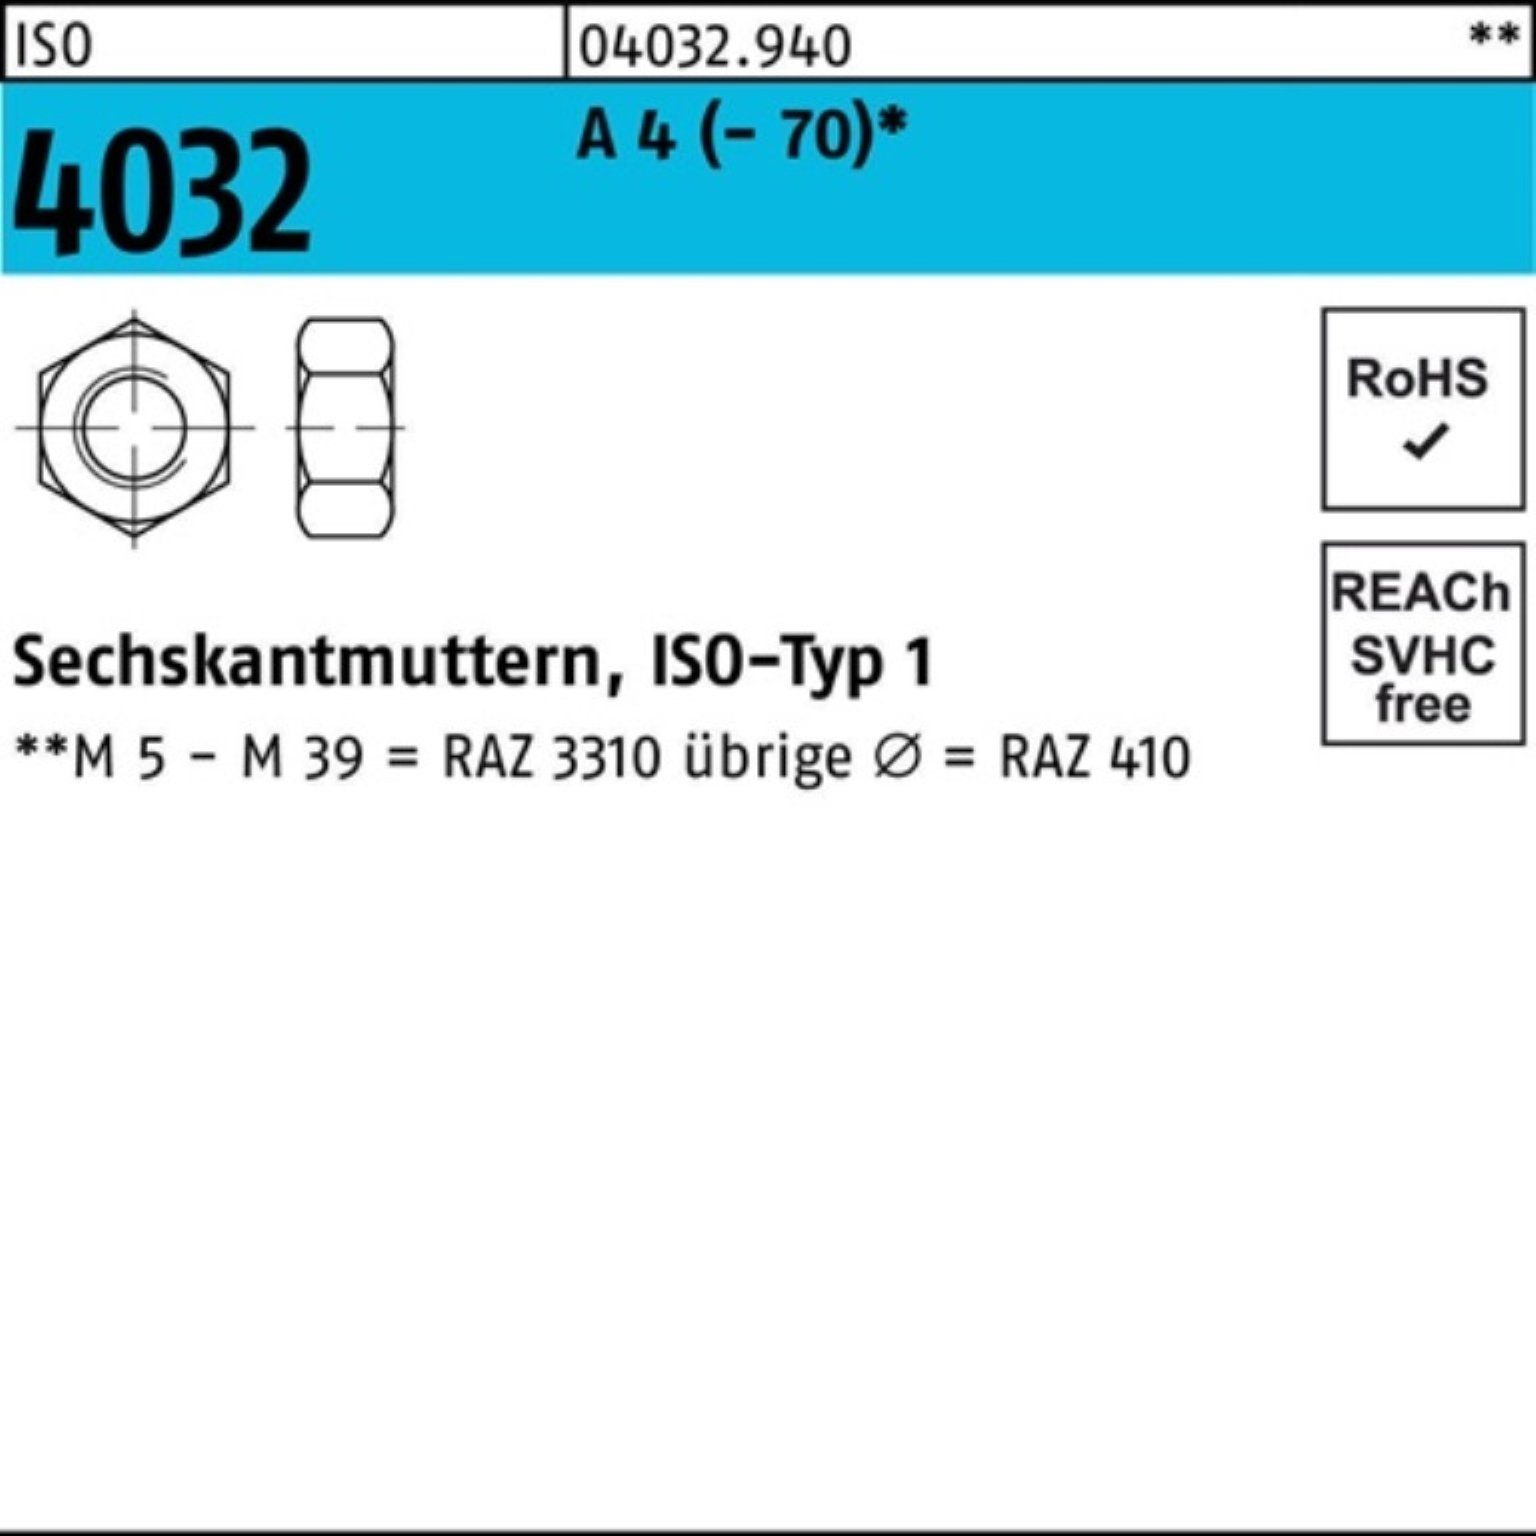 Bufab Pack ISO (70) Sechskantmutter 250 4032 Muttern ISO Stück 250er M10 A 4 4032